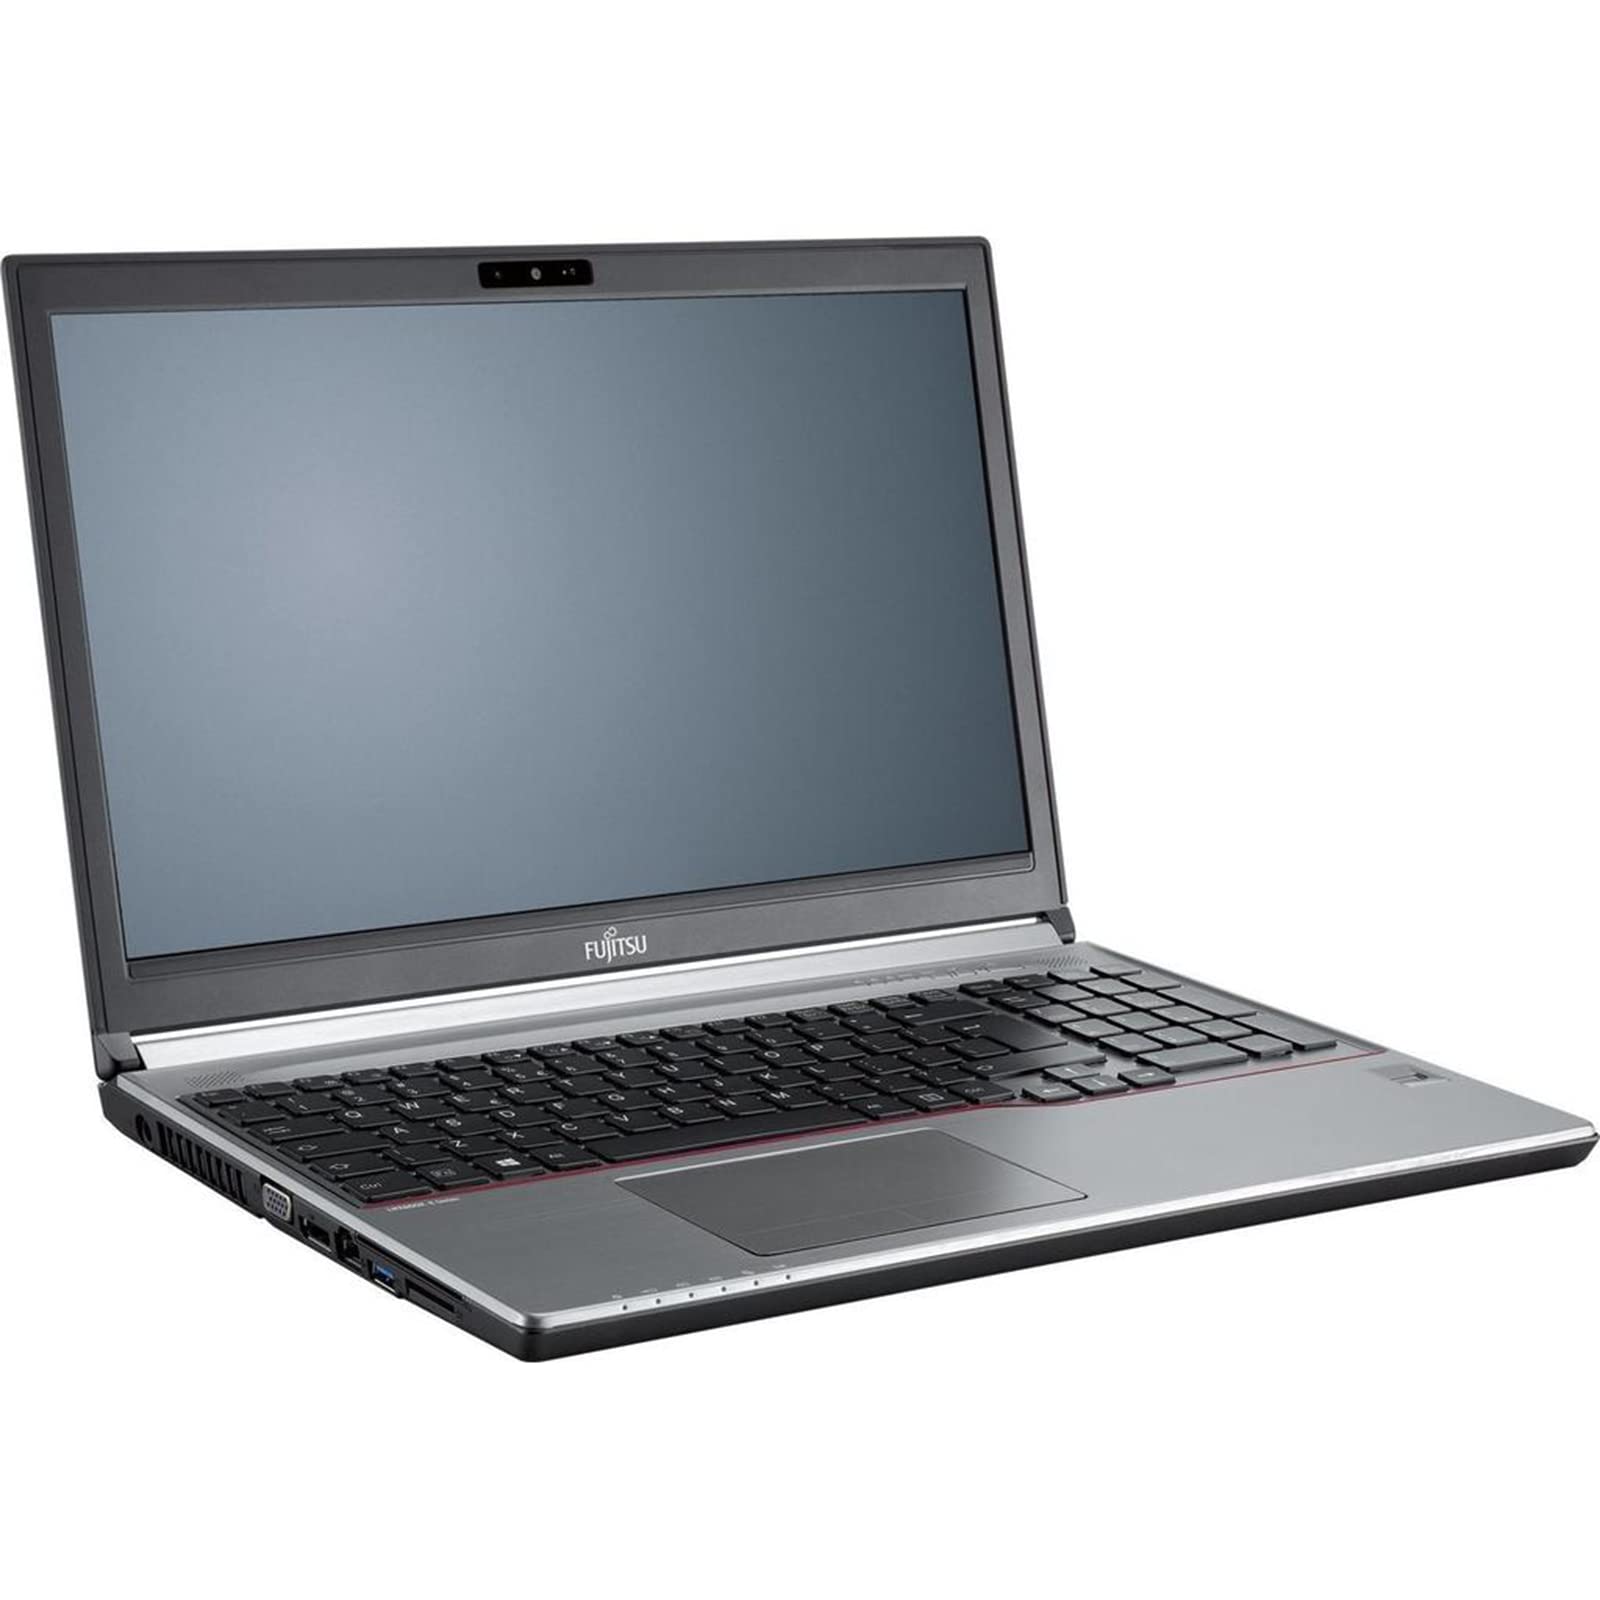 Laptop Fujitsu Lifebook E756 rigenerato grado A ? Intel i5-6200U/8Gb/SSD240/